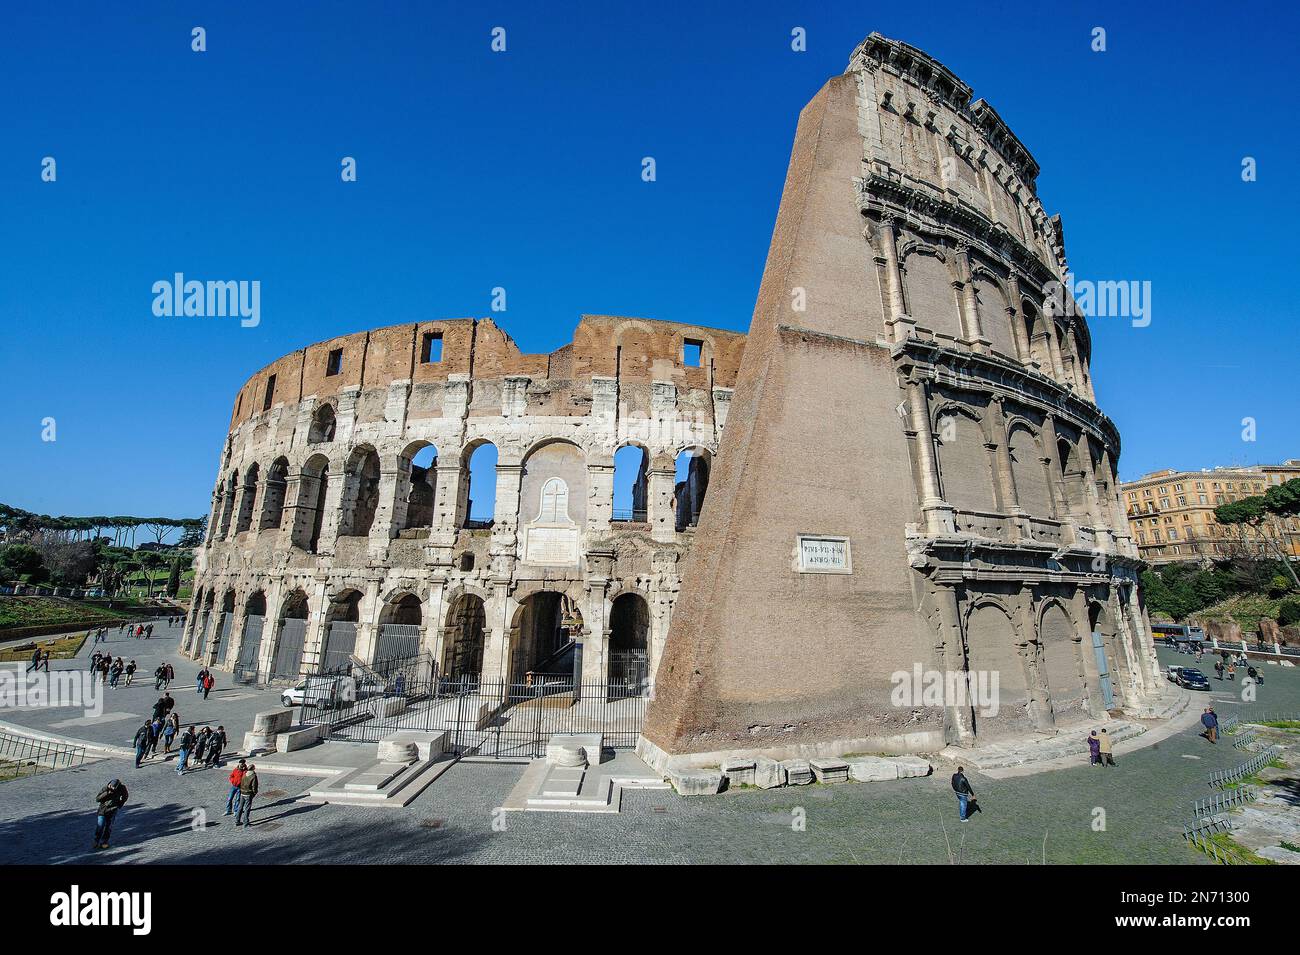 historisches Stadion Arena Kampfbahn Amphitheatre Kolosseum, ROM, Latium, Italien, Europa Banque D'Images